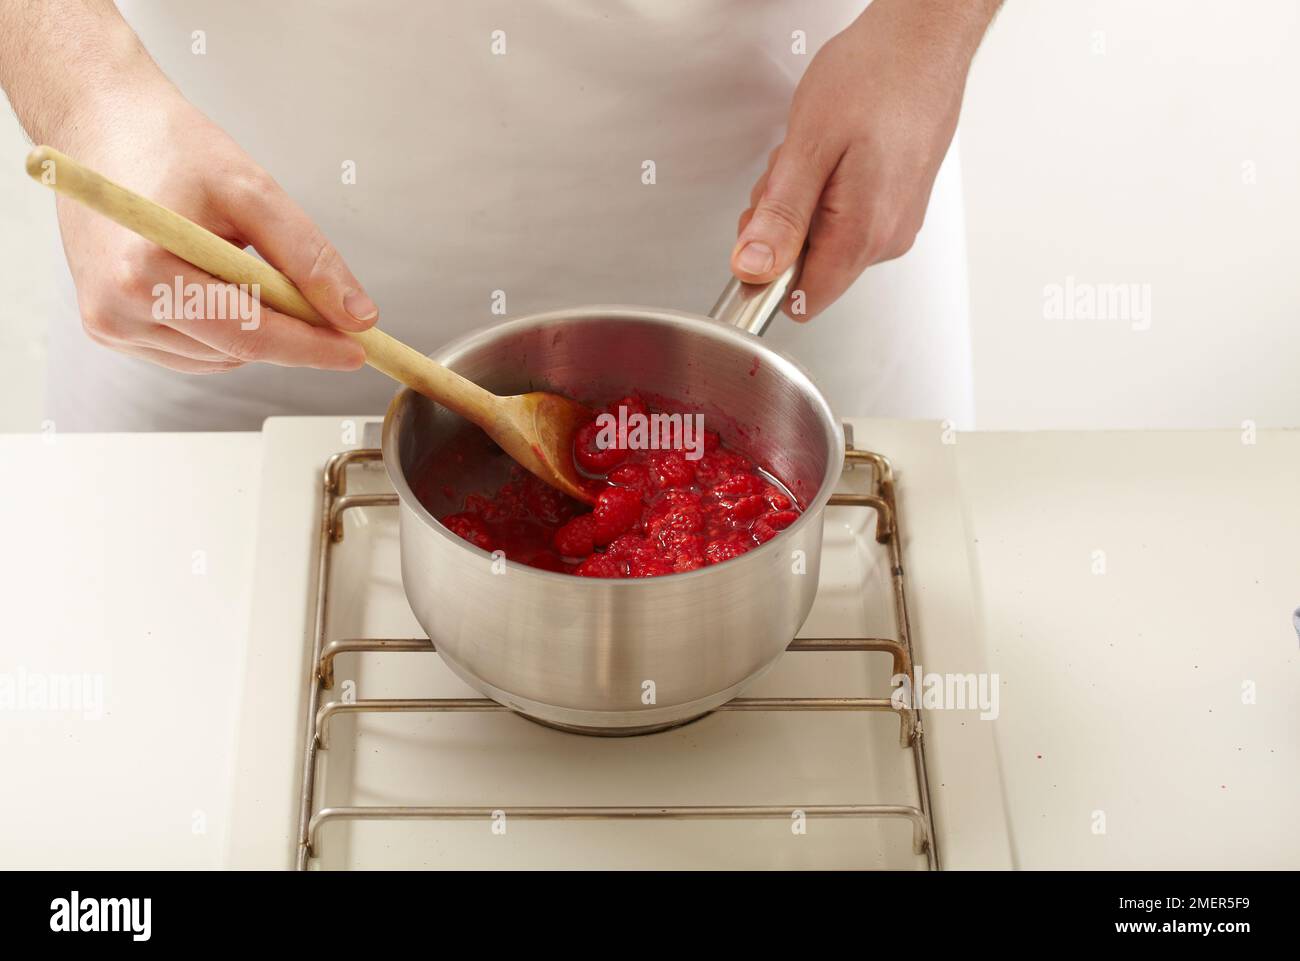 Cooking raspberries in a saucepan Stock Photo